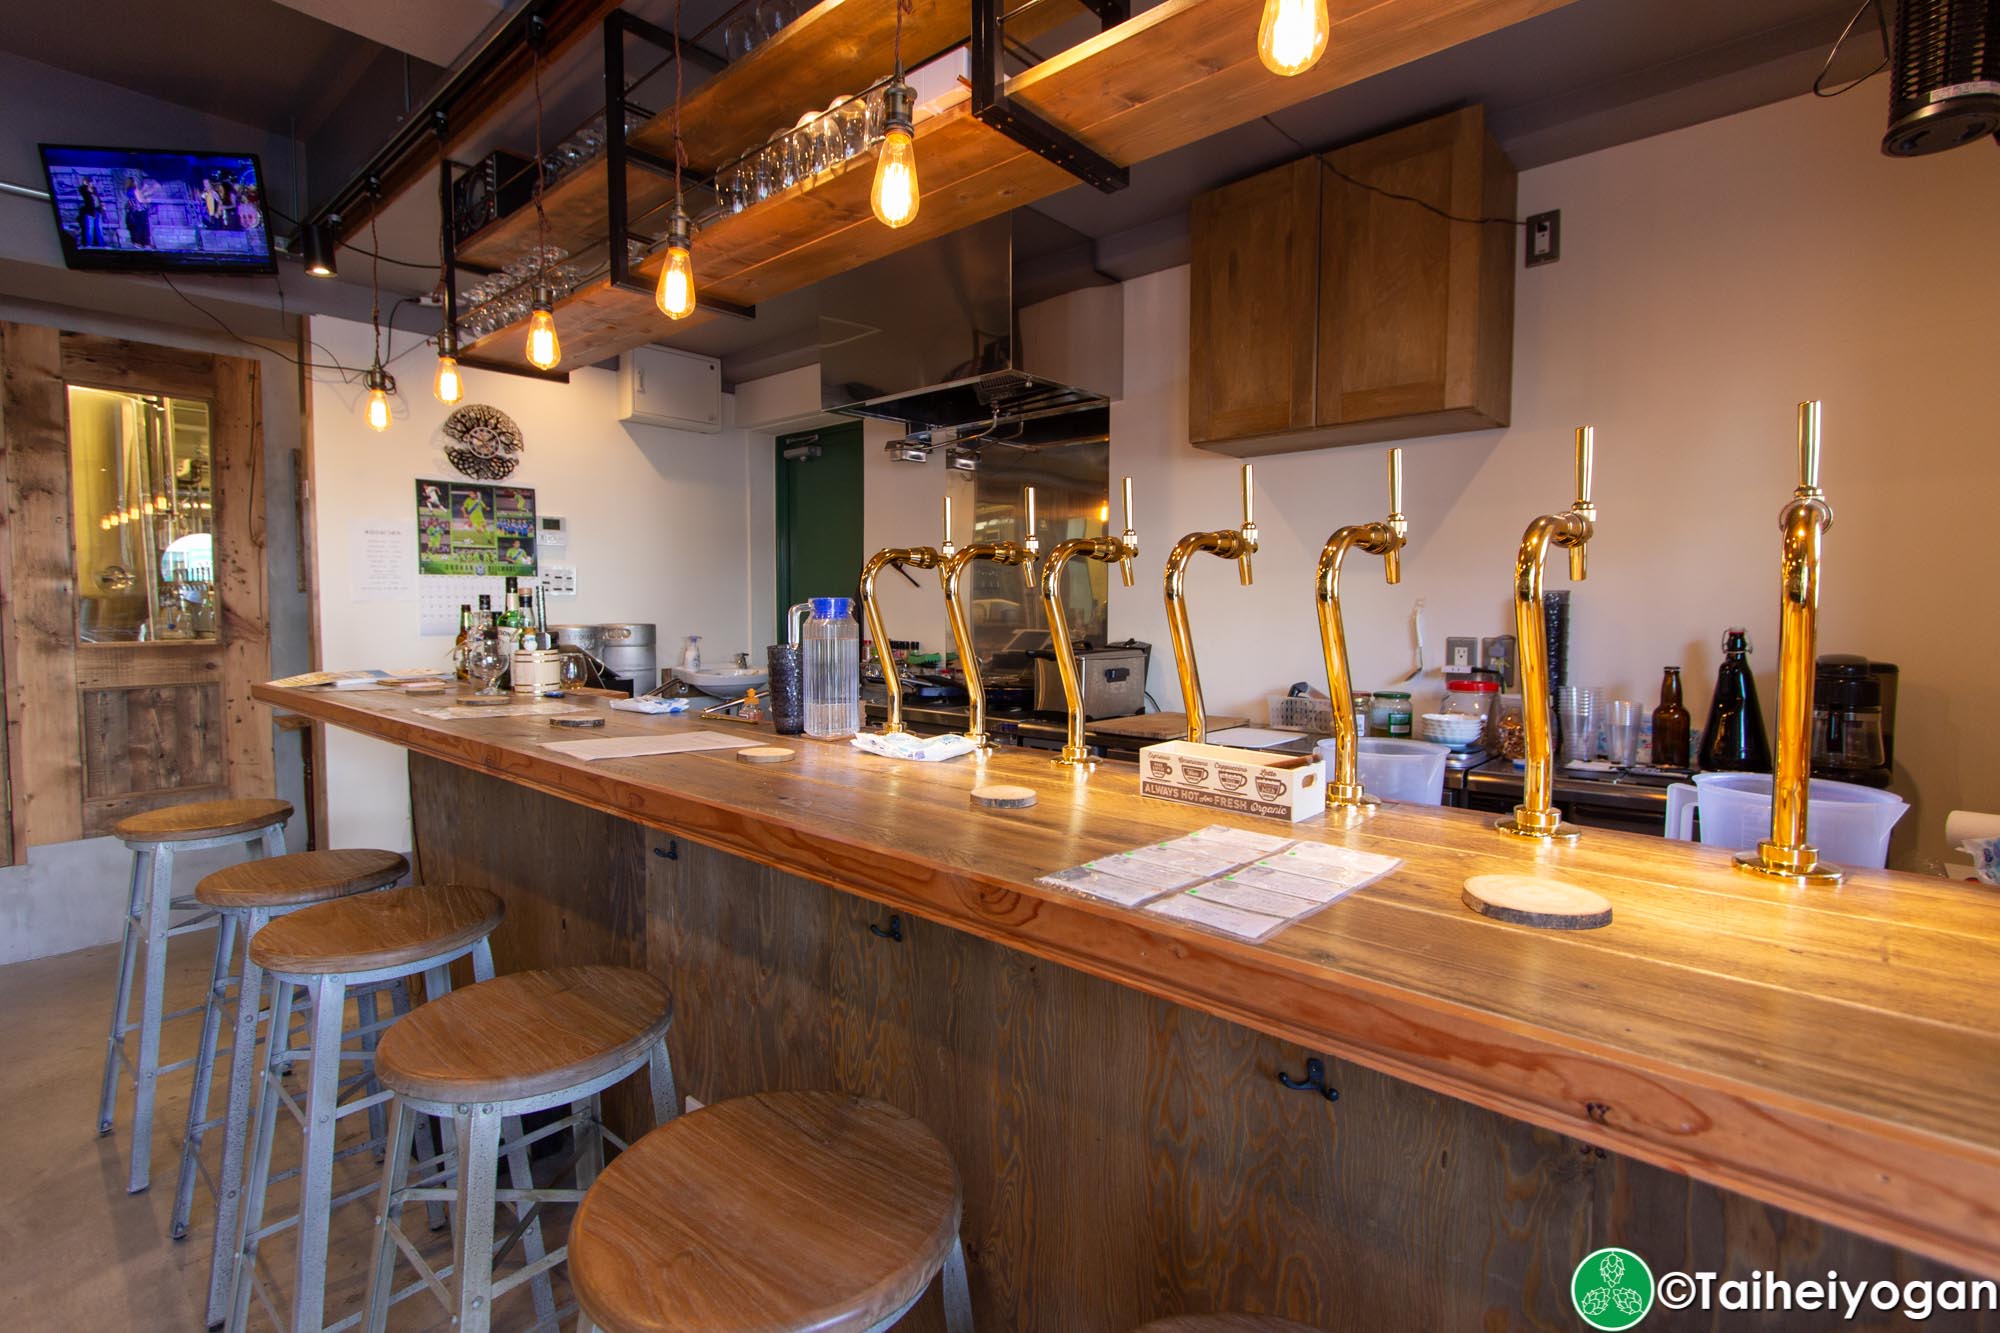 Yggdrasil Brewing - Interior - Bar Counter